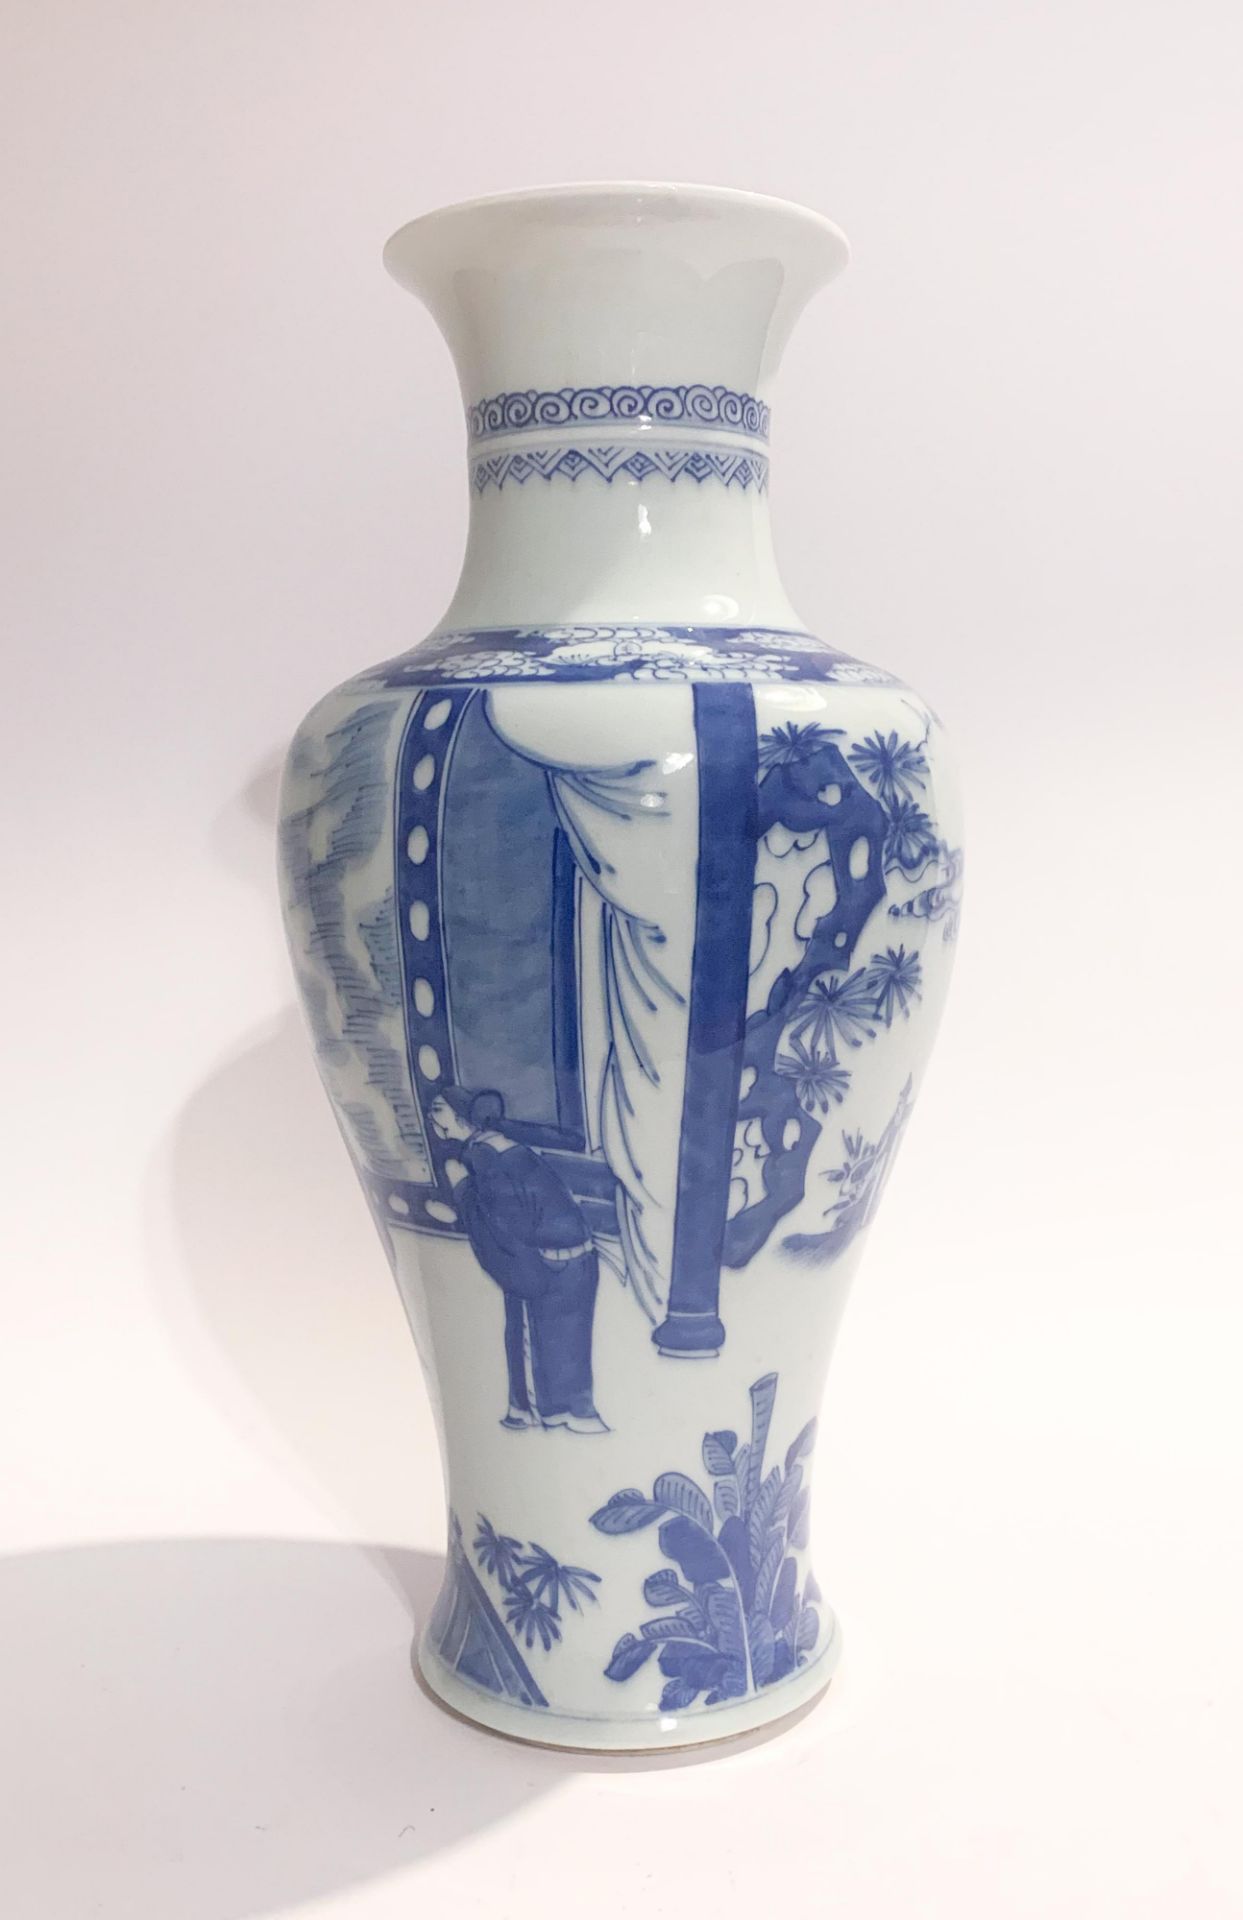  Floor vase China Qing dynasty 19th century - Image 4 of 11